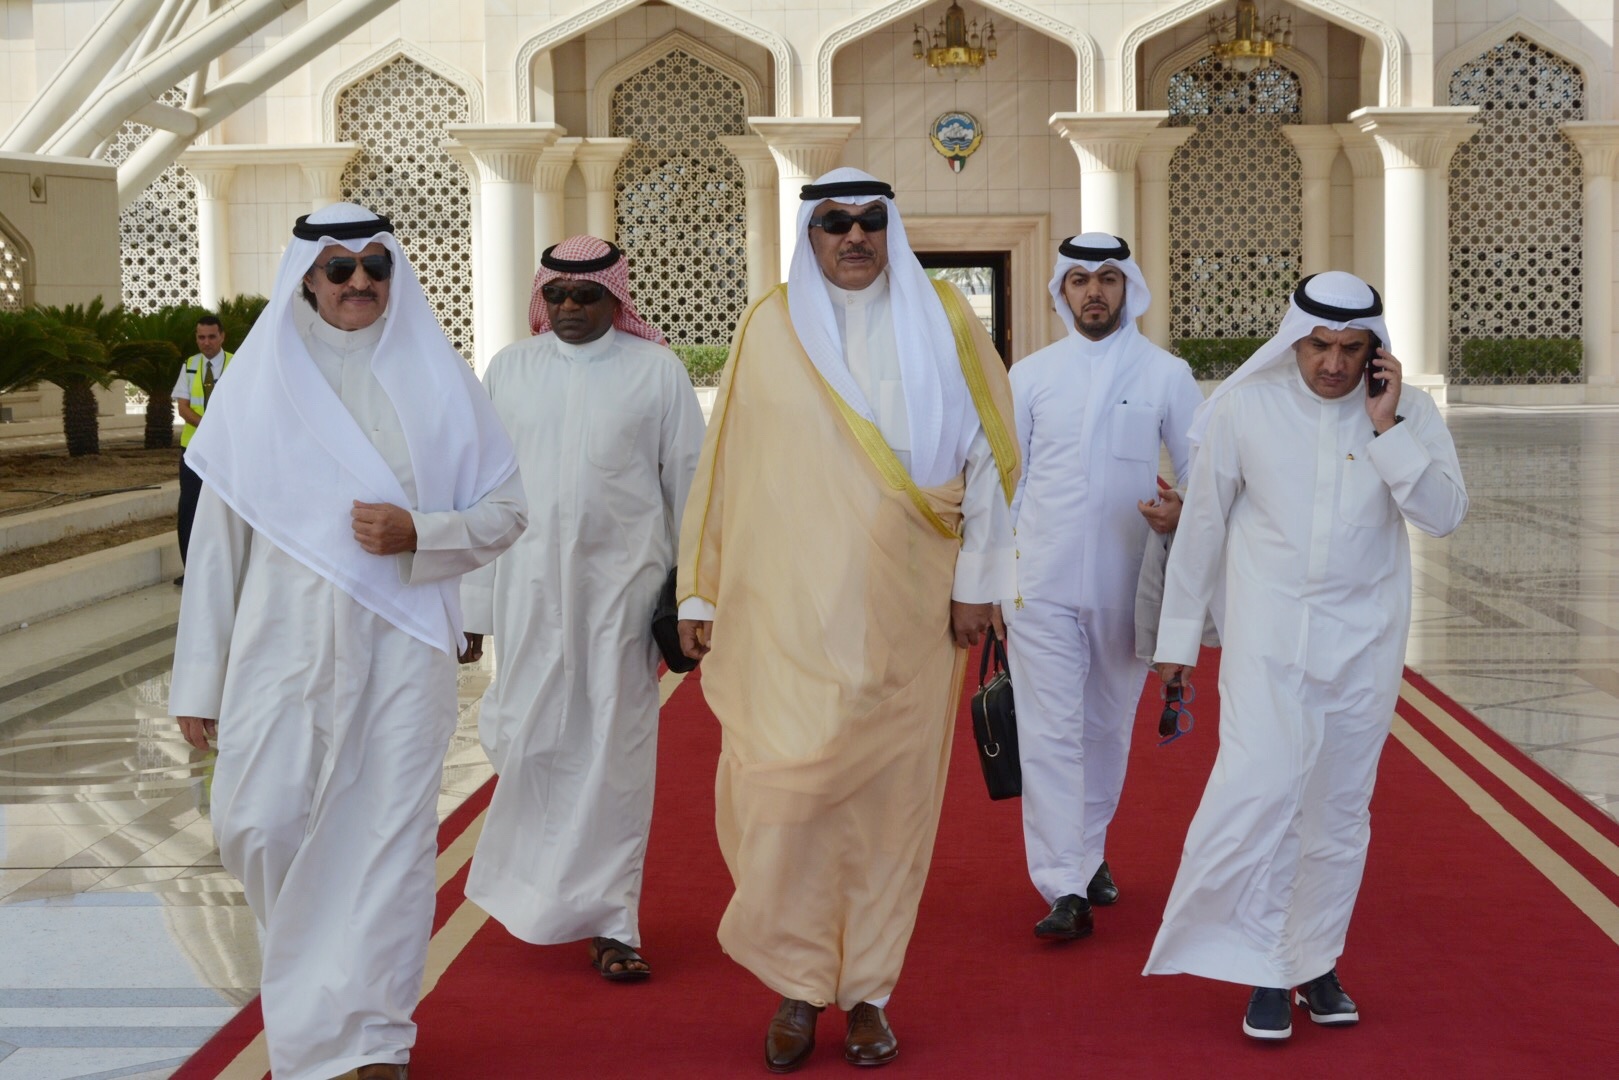 First Deputy Prime Minister and Minister of Foreign Affairs Sheikh Sabah Al-Khaled Al-Hamad Al-Sabah headed to Doha, Qatar